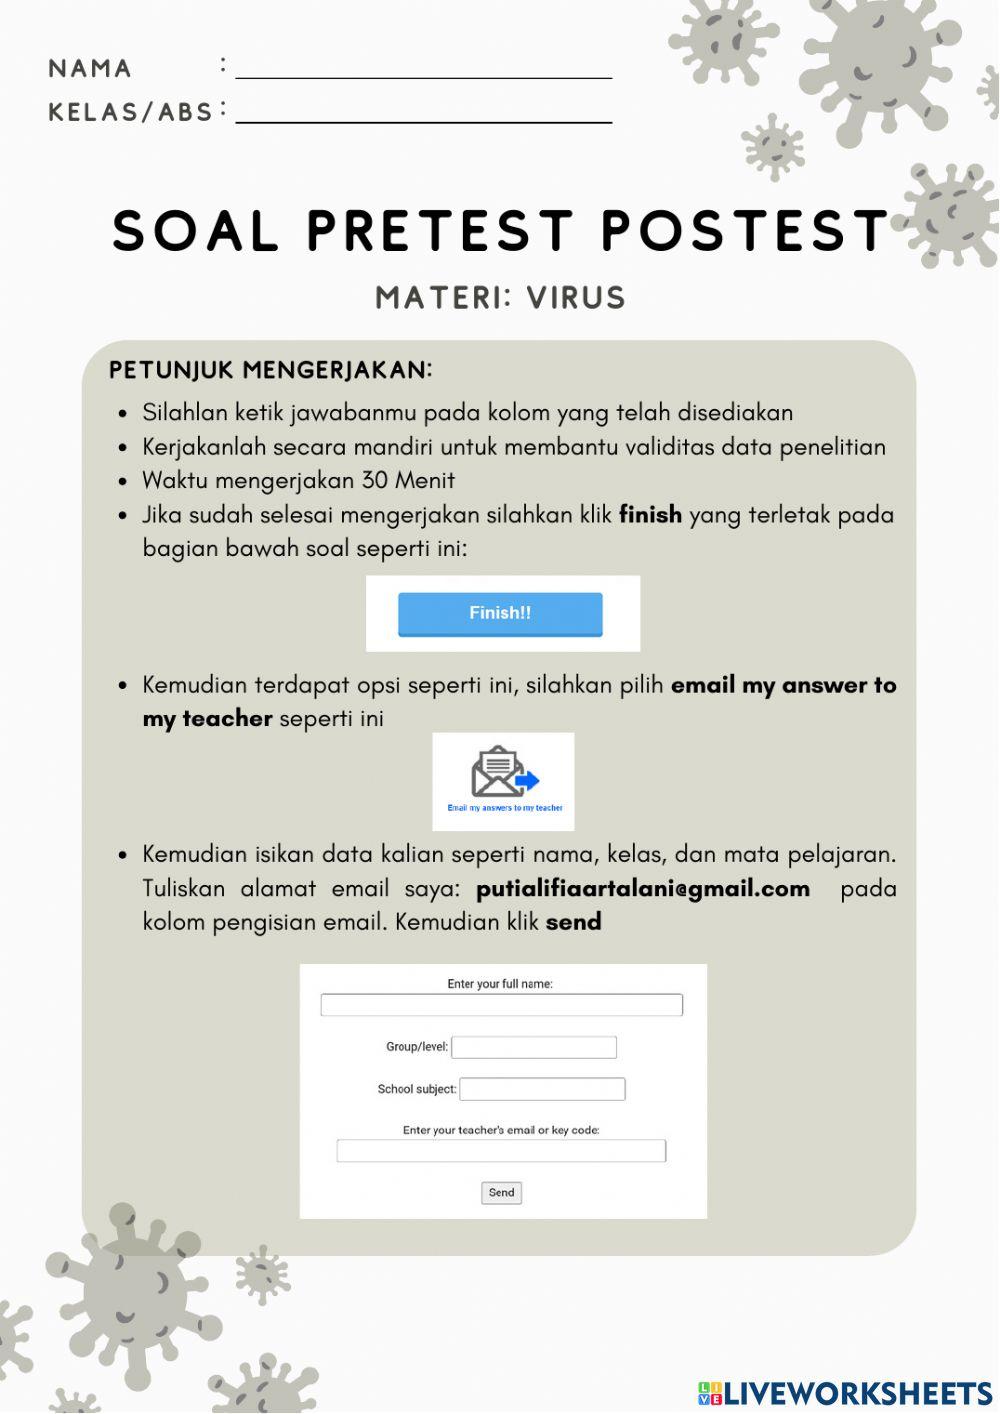 Pretest Postest